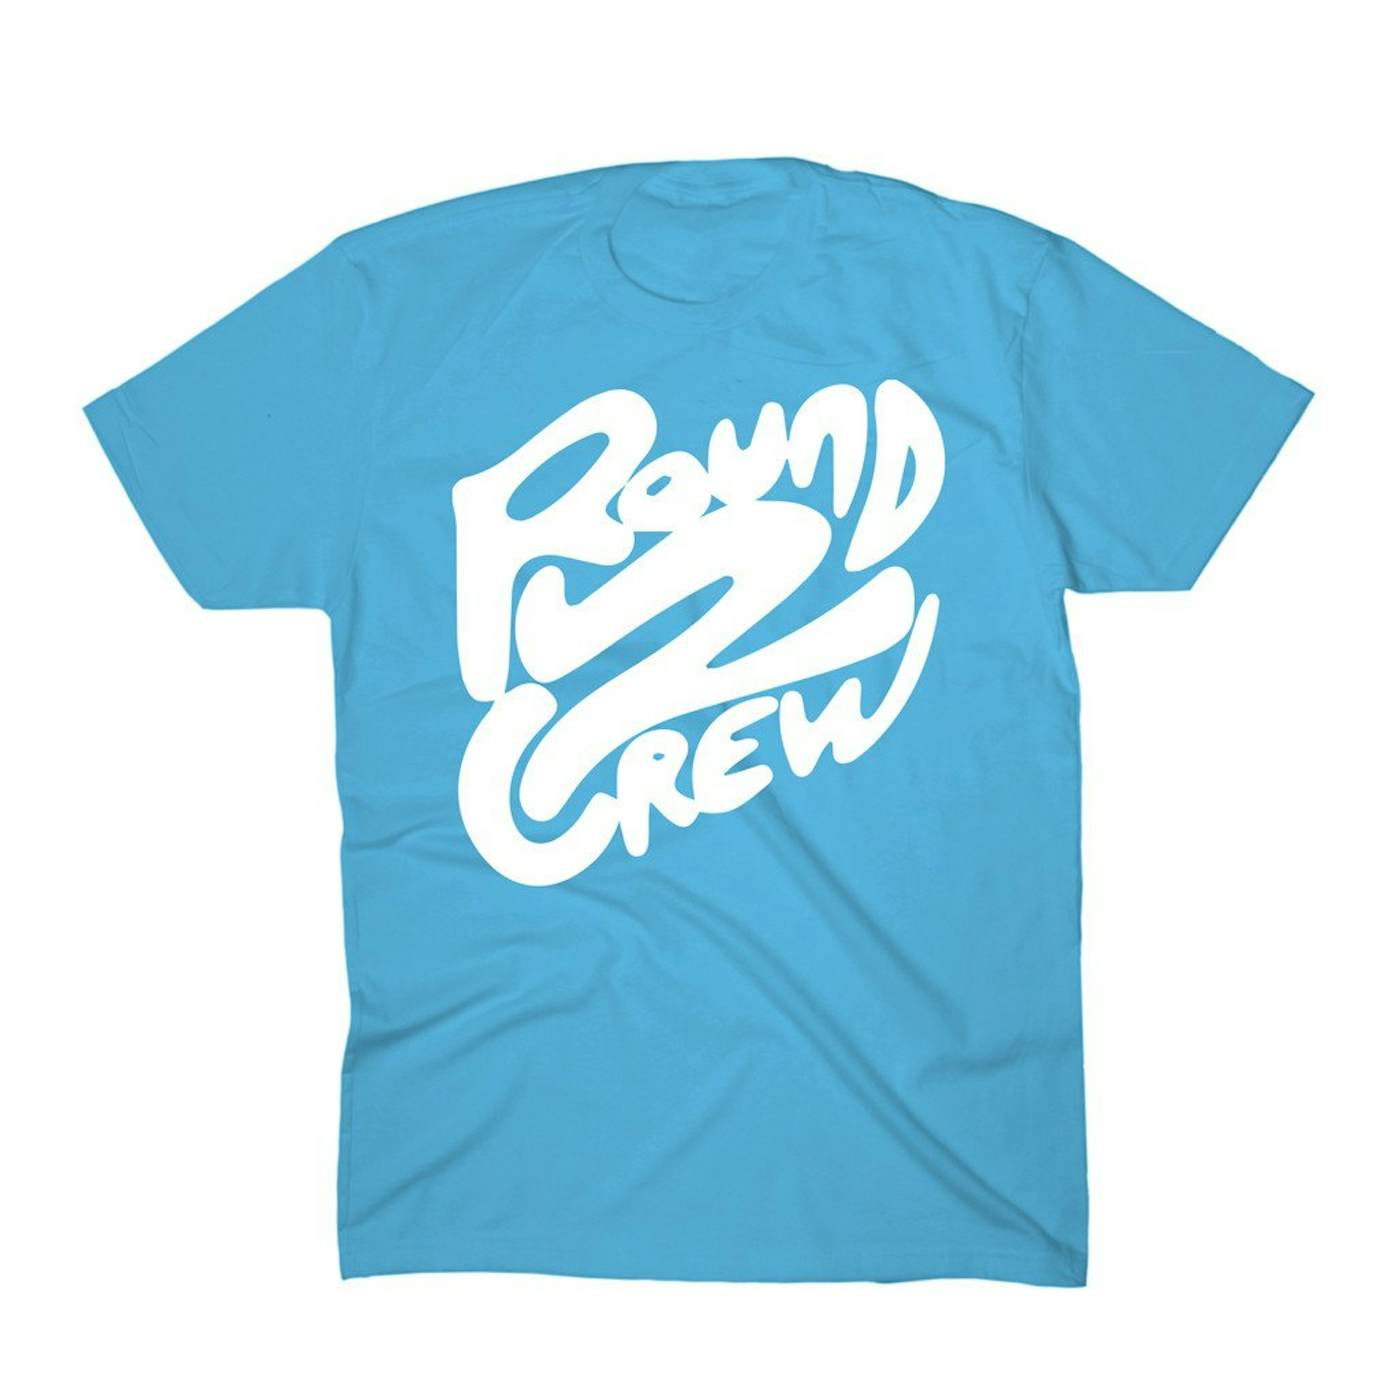 Round2Crew - Blue T-Shirt